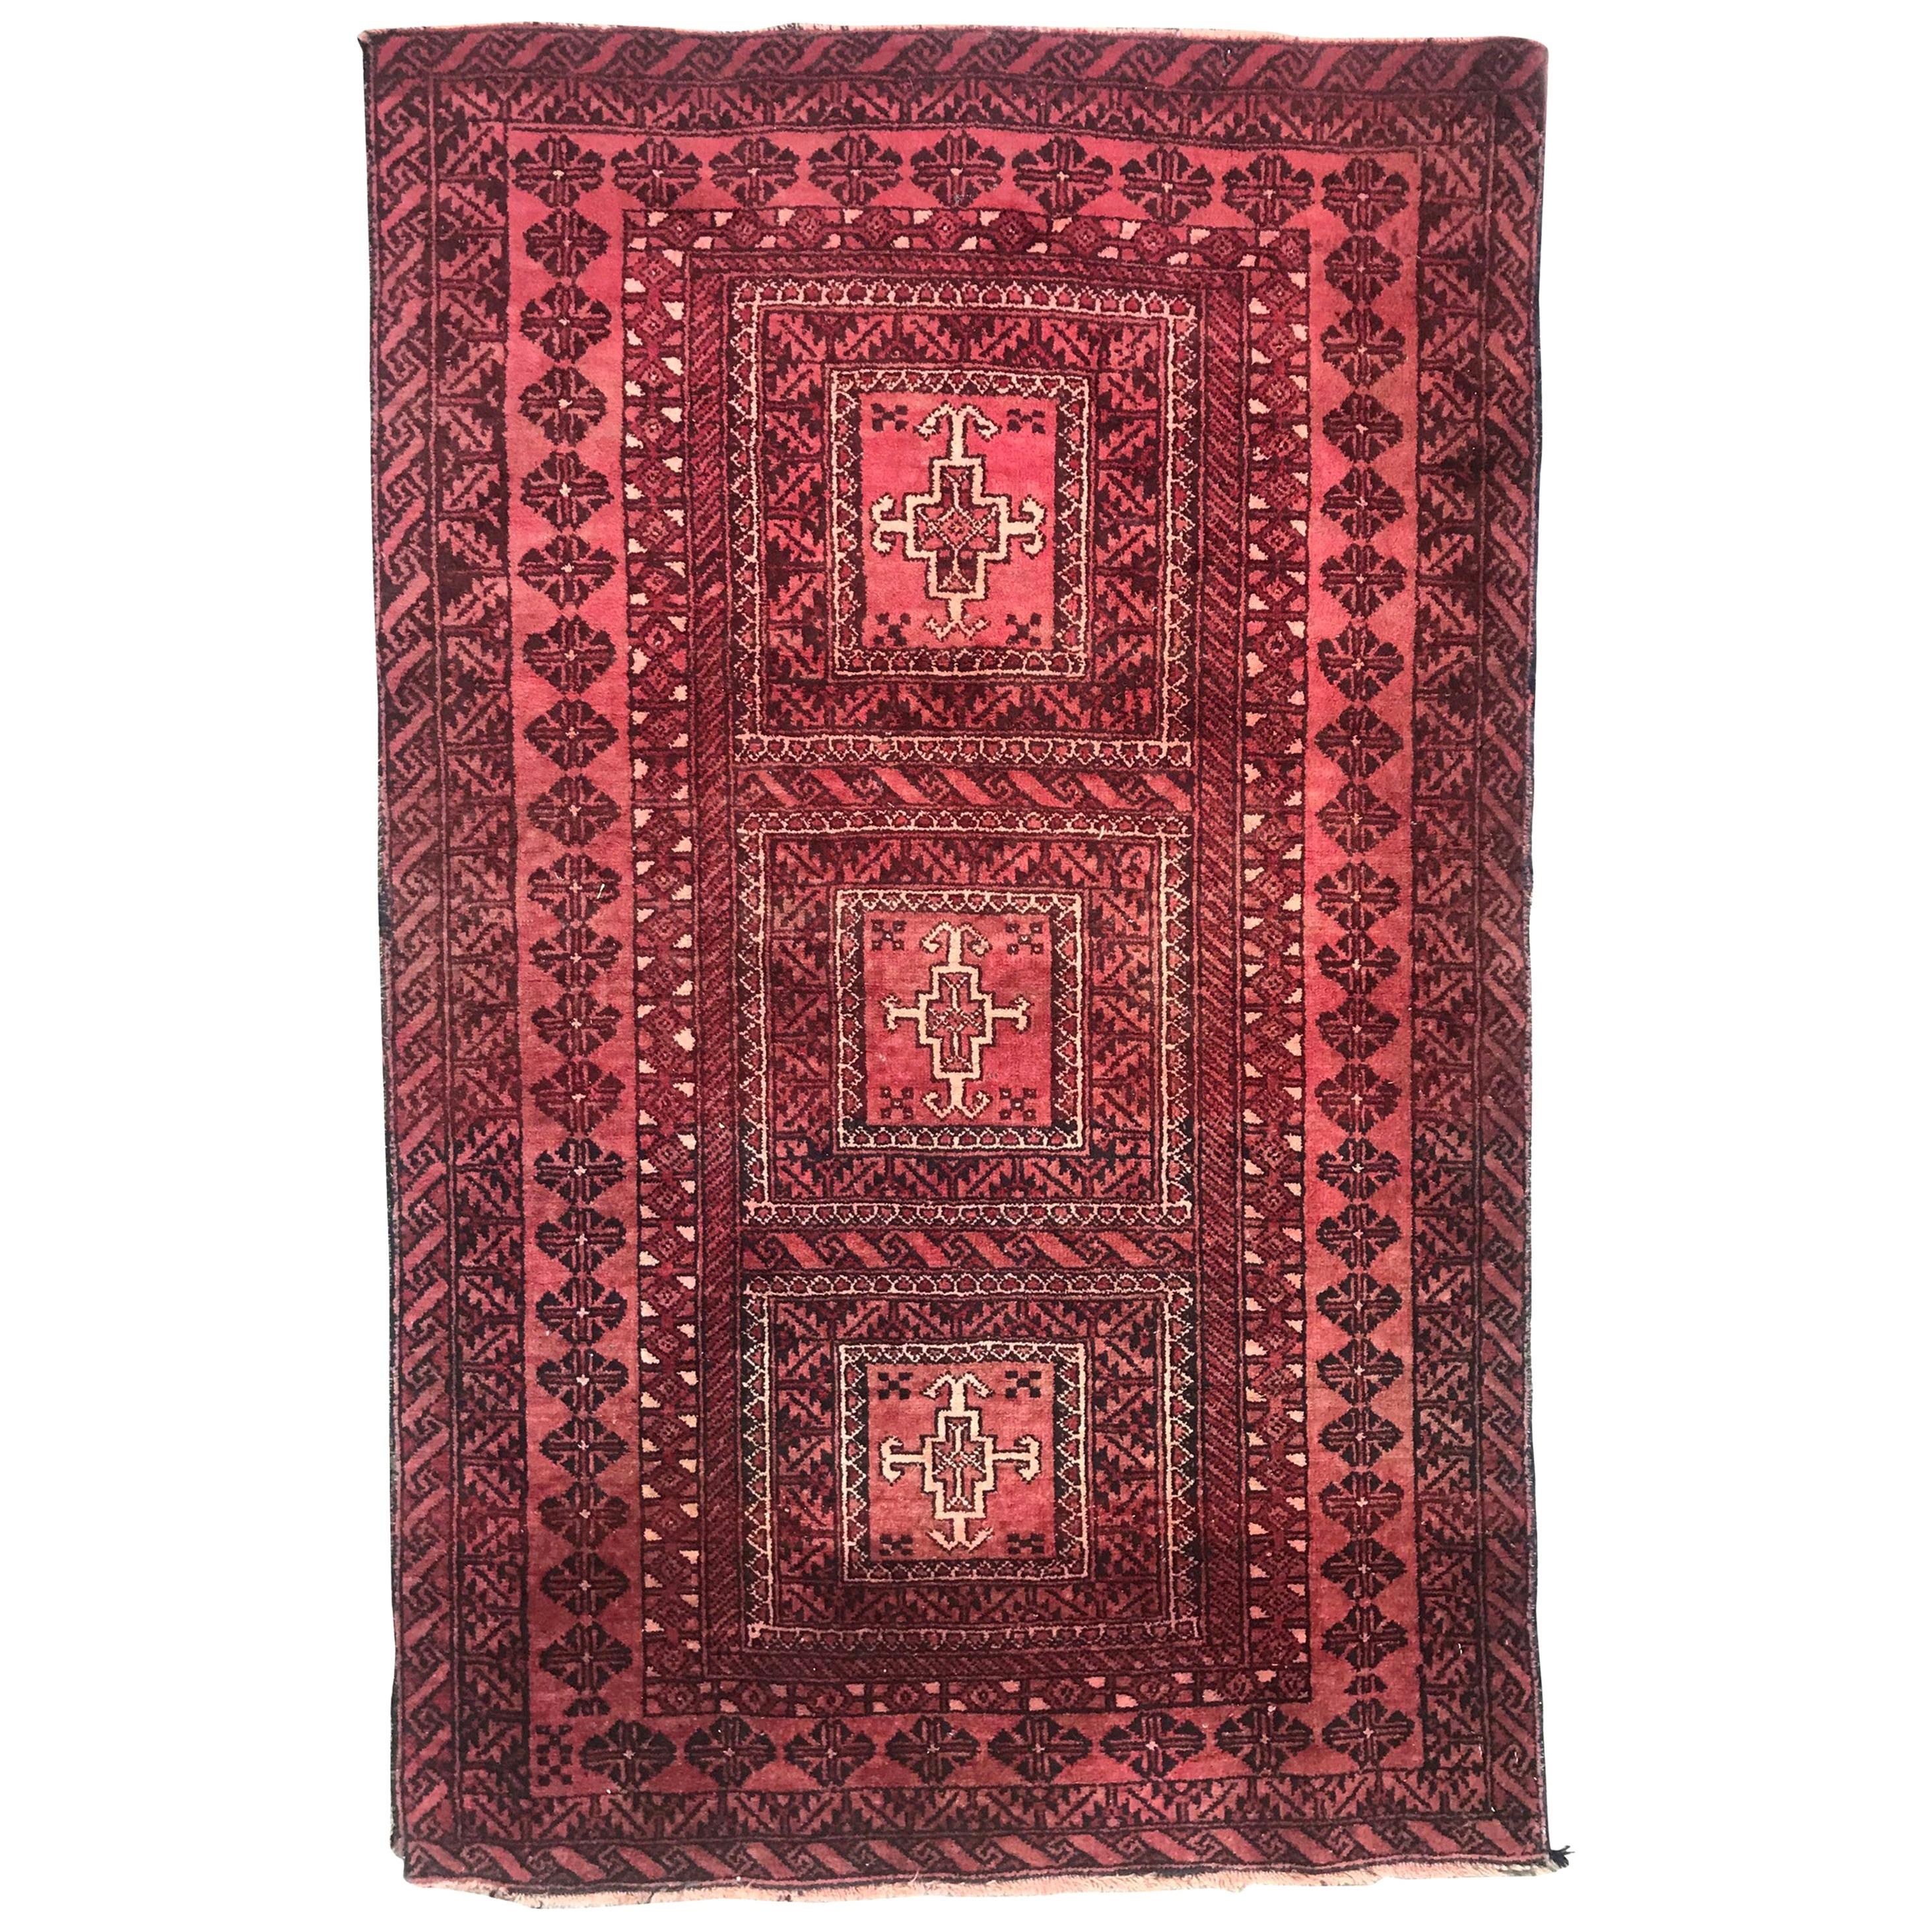 Beau tapis de baluchon turc vintage